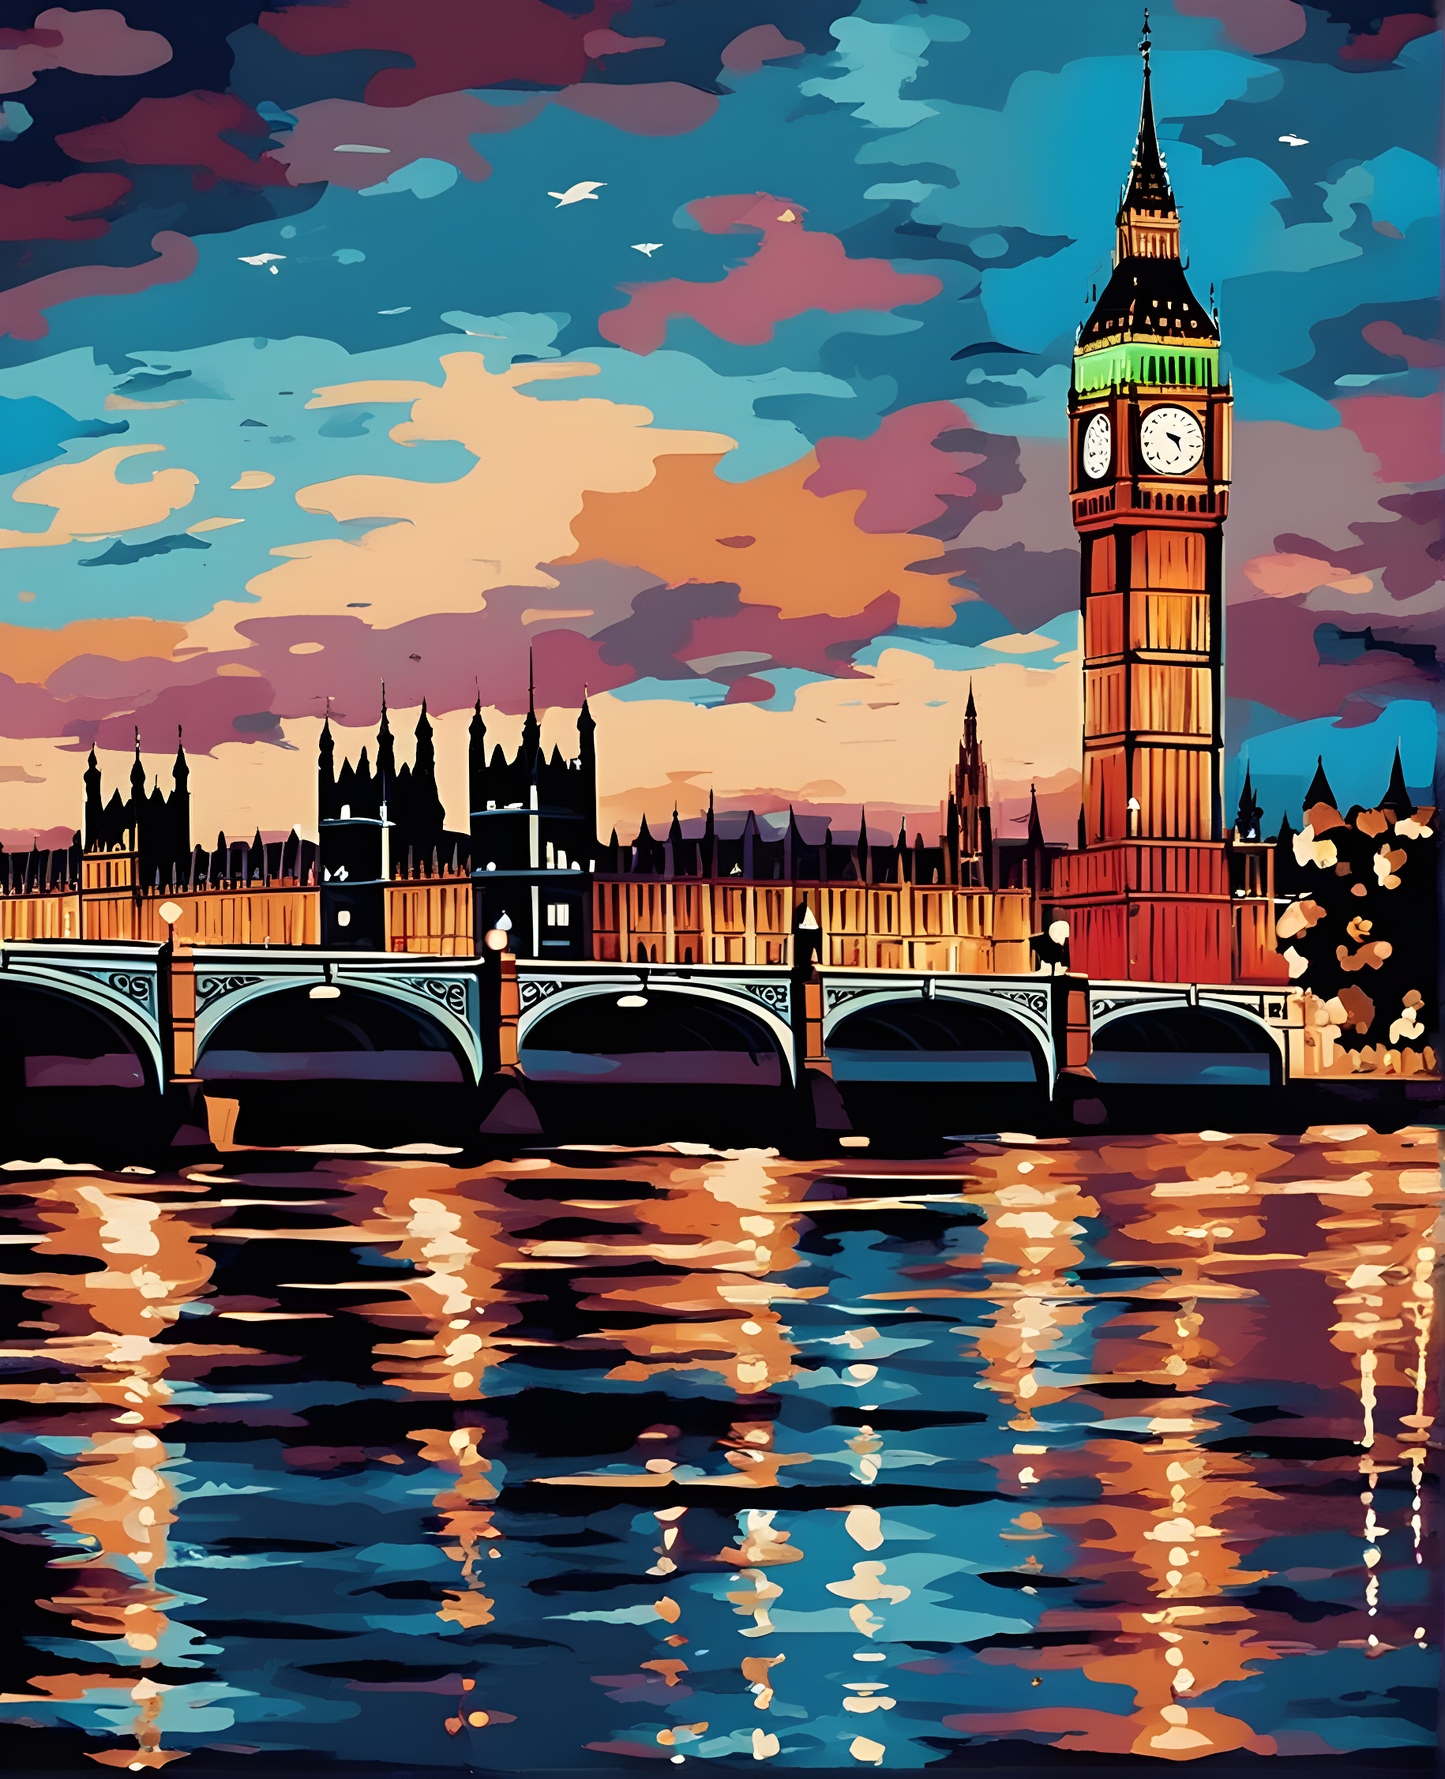 Romantic Big Ben, London (2) - Van-Go Paint-By-Number Kit